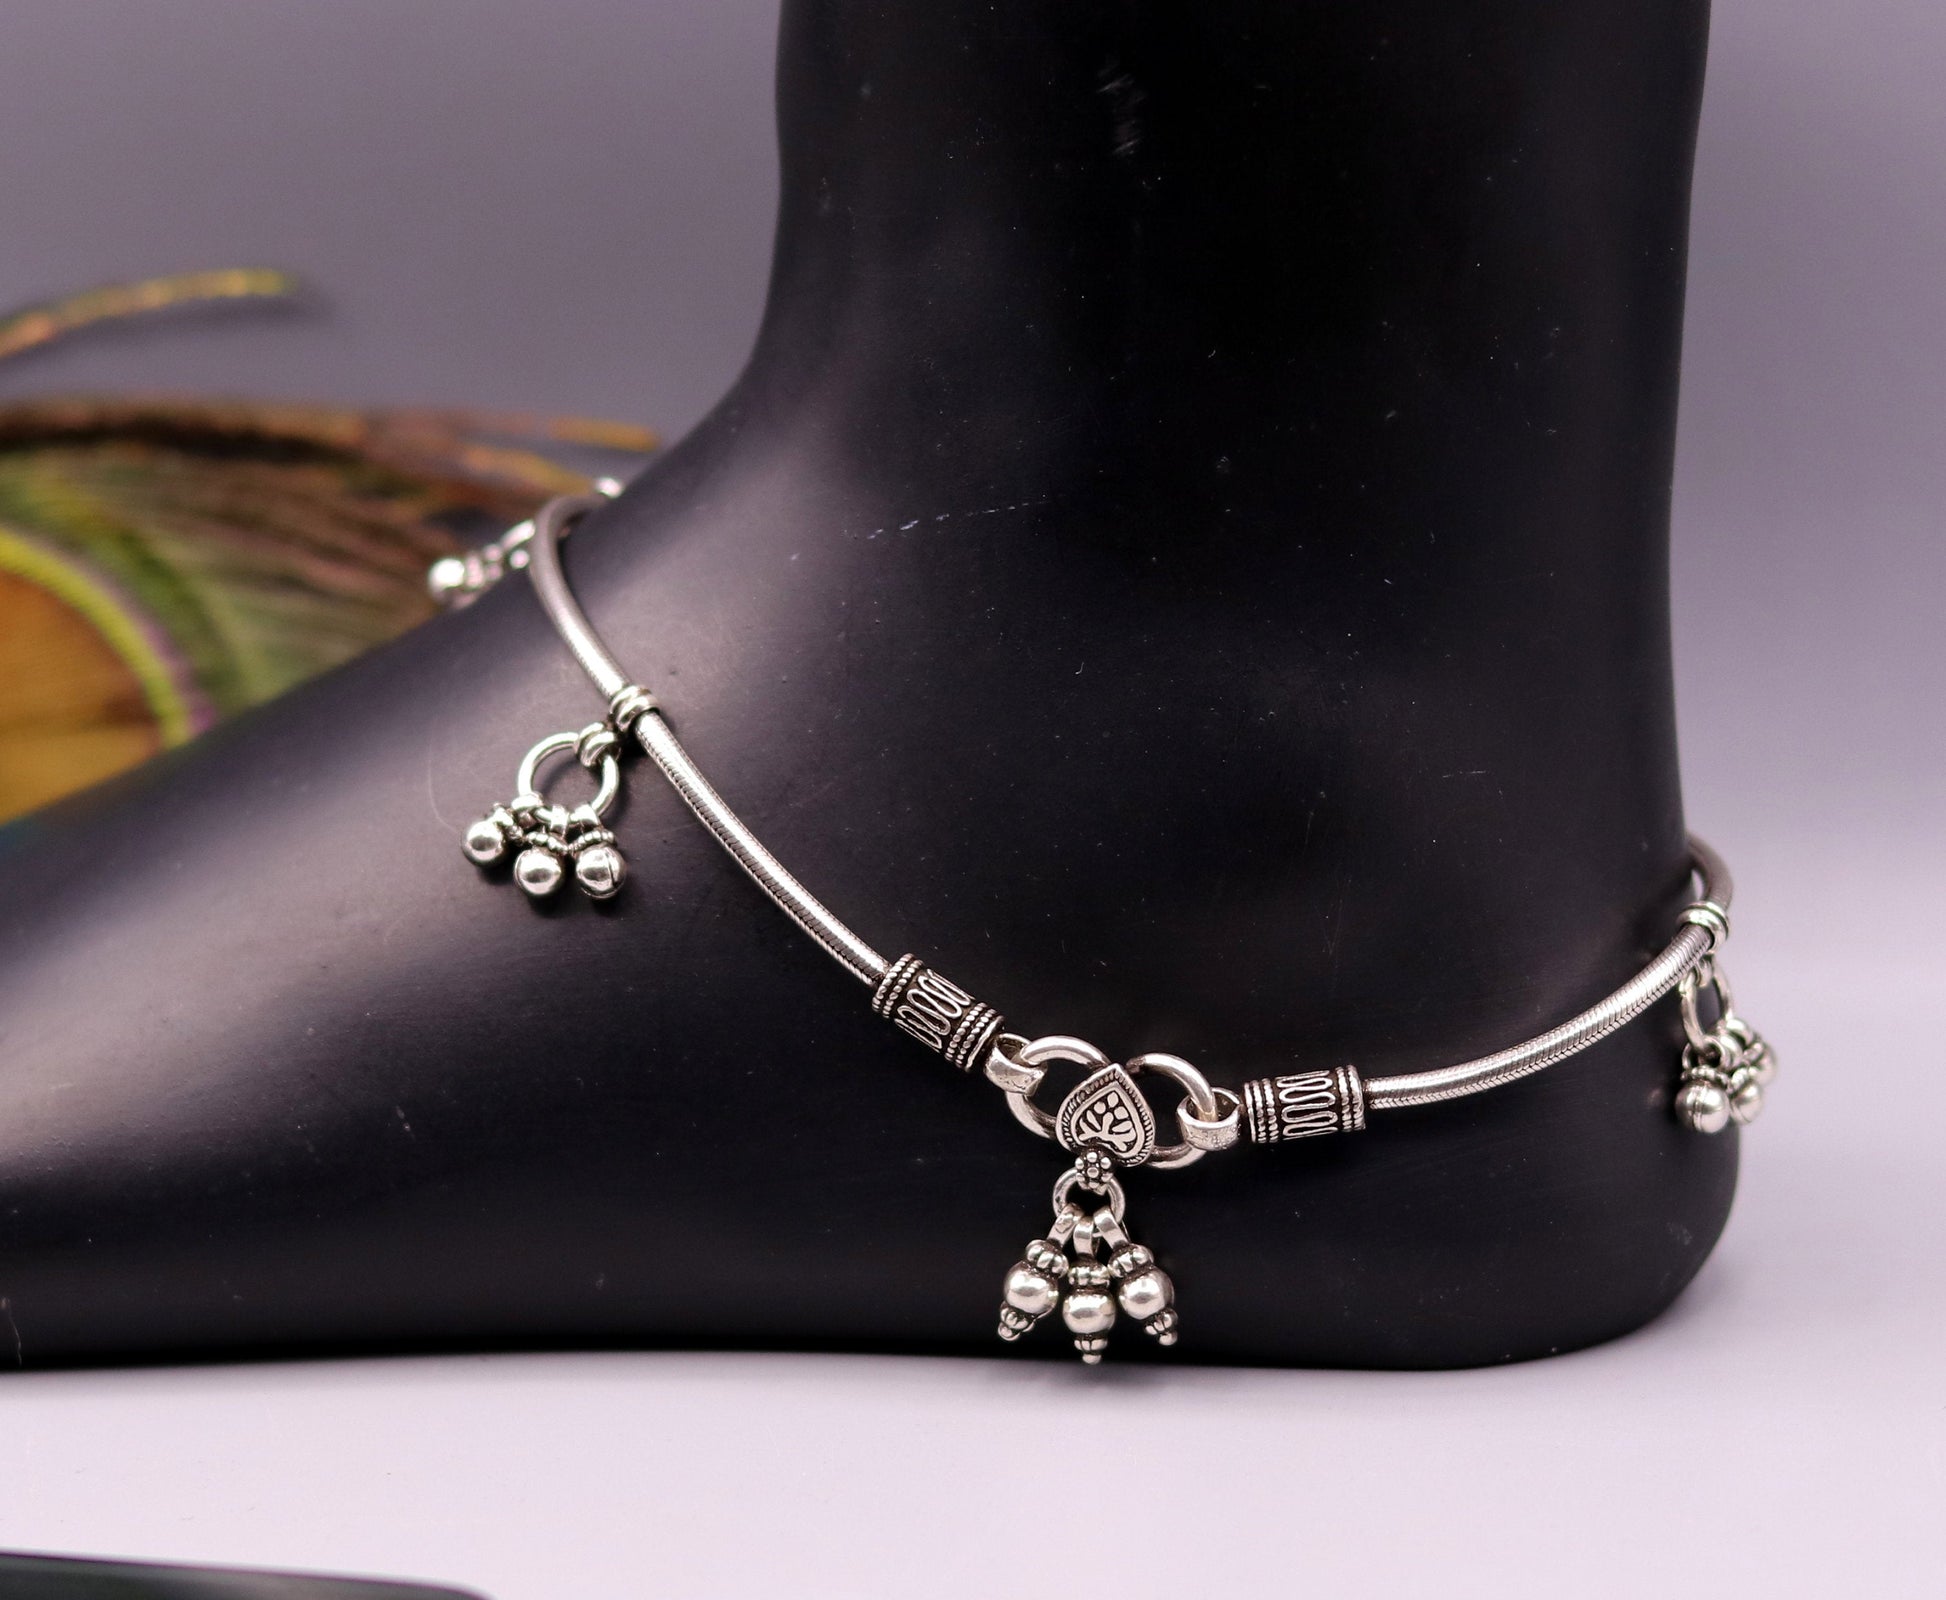 925 Sterling silver vintage handmade antique design stylish anklet foot bracelet hanging bells tribal belly dance charm ankle jewelry ank120 - TRIBAL ORNAMENTS